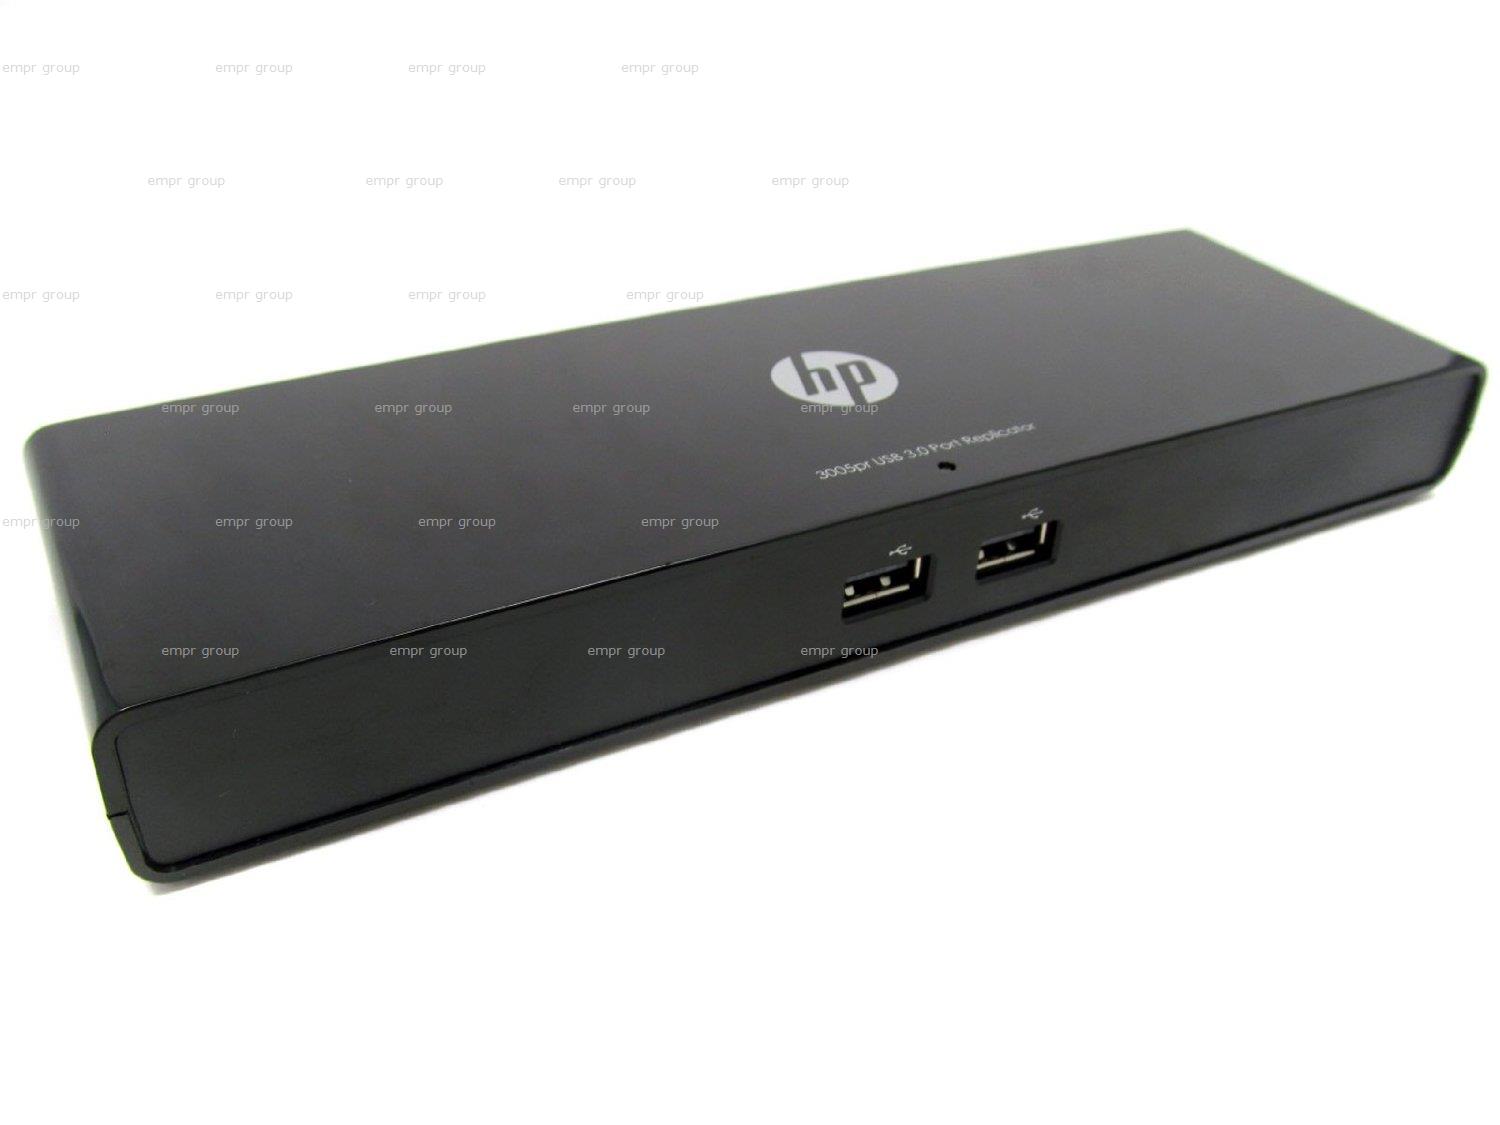 HP EliteBook 820 G1 Laptop (F8Z30PA) Port Replicator 690650-001